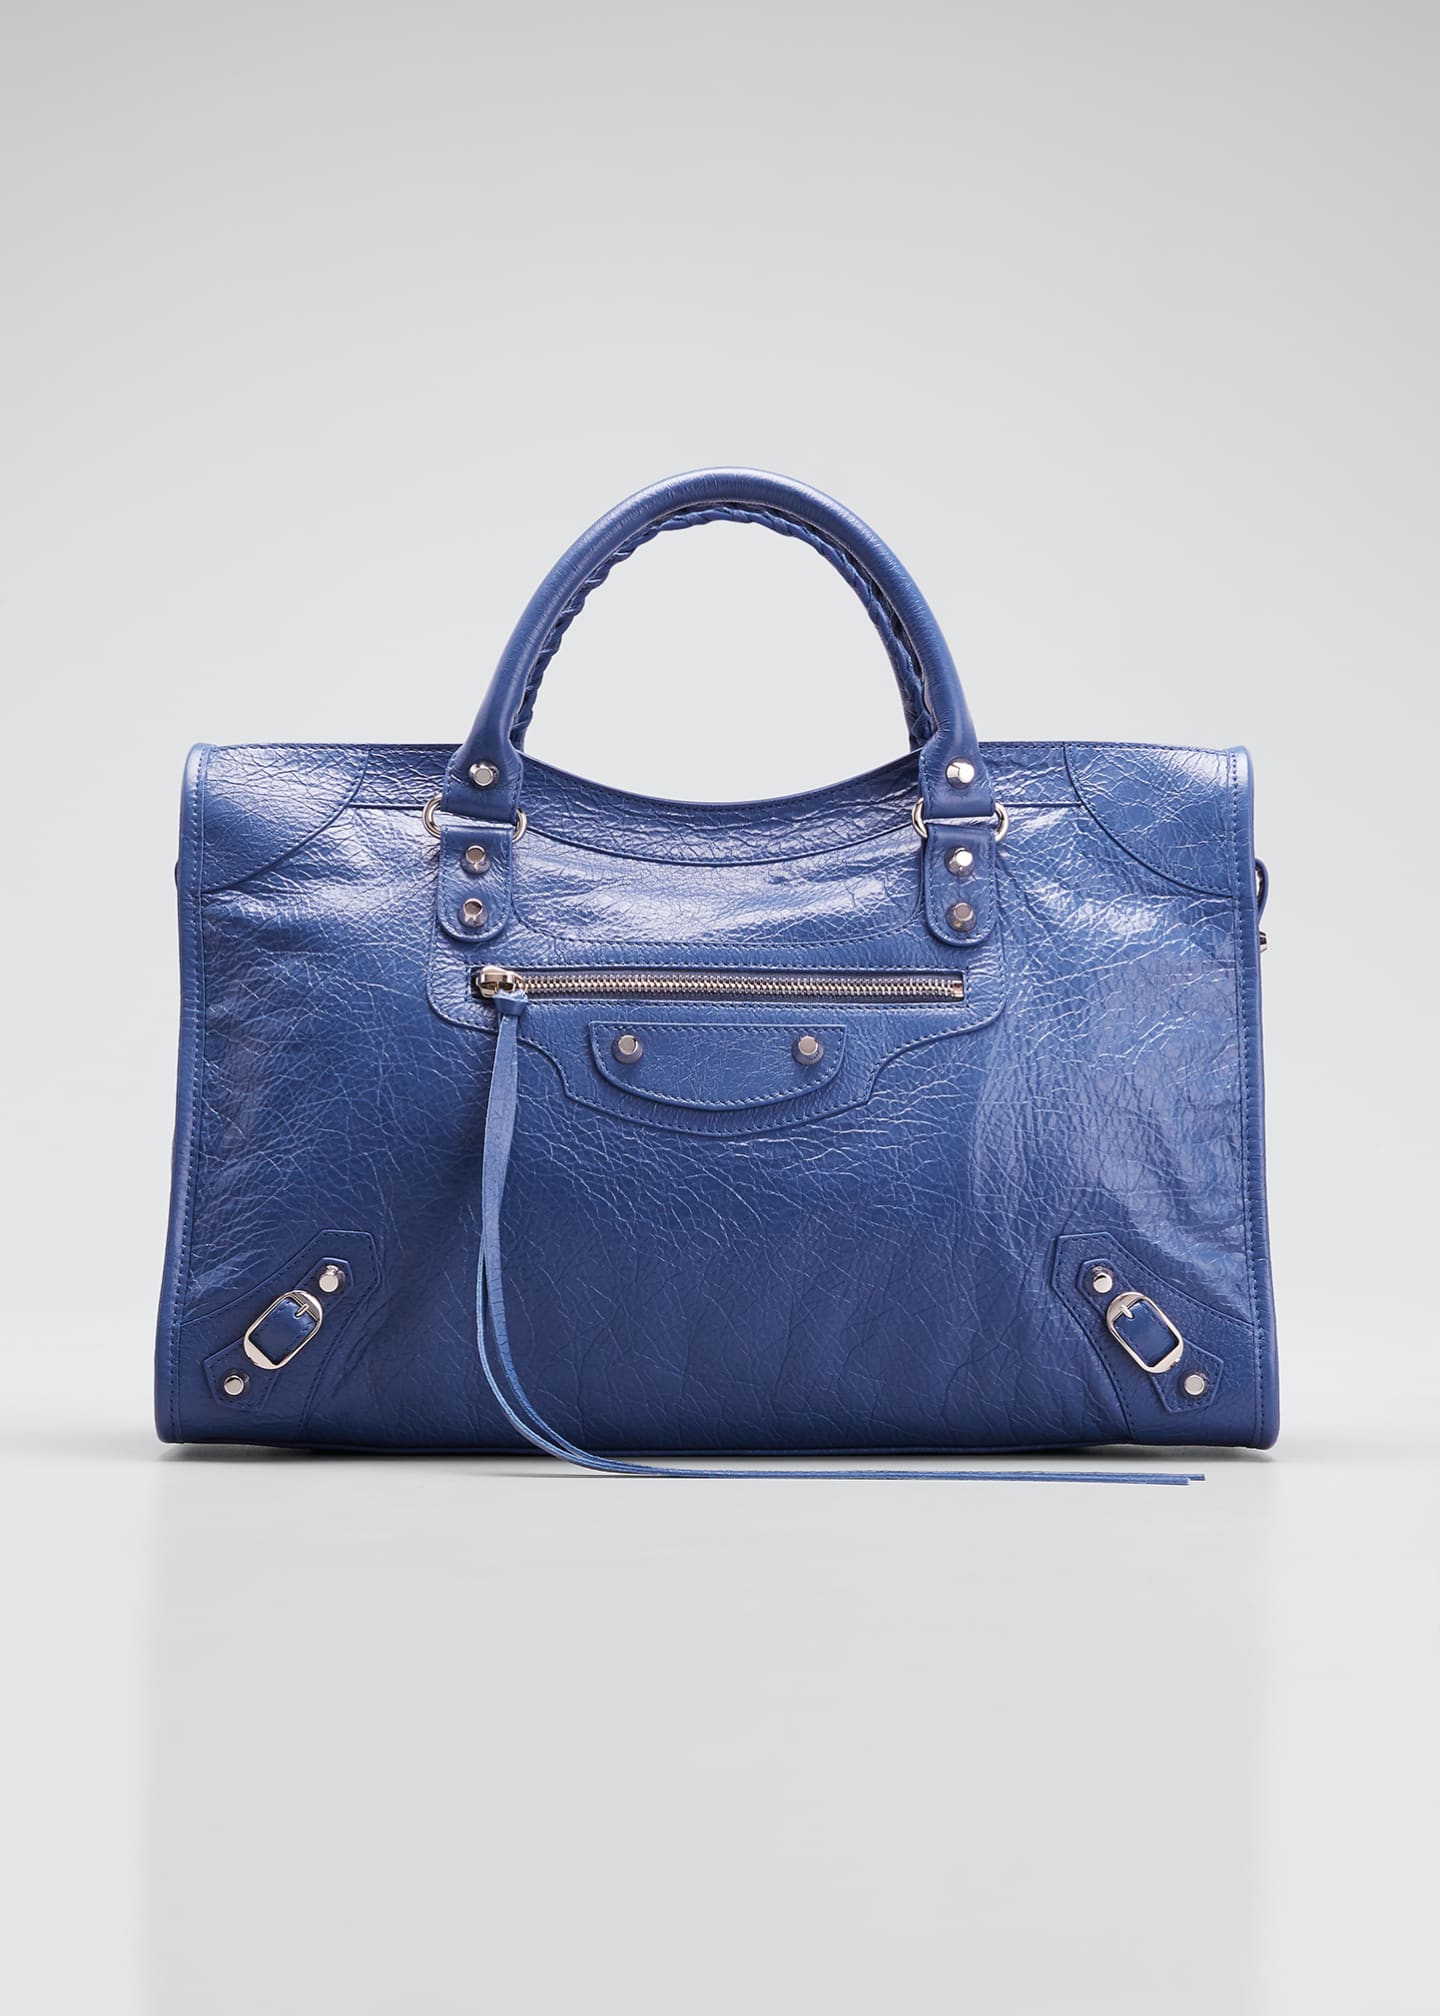 Saint Laurent Handbags : Shoulder & Satchel Bags at Bergdorf Goodman